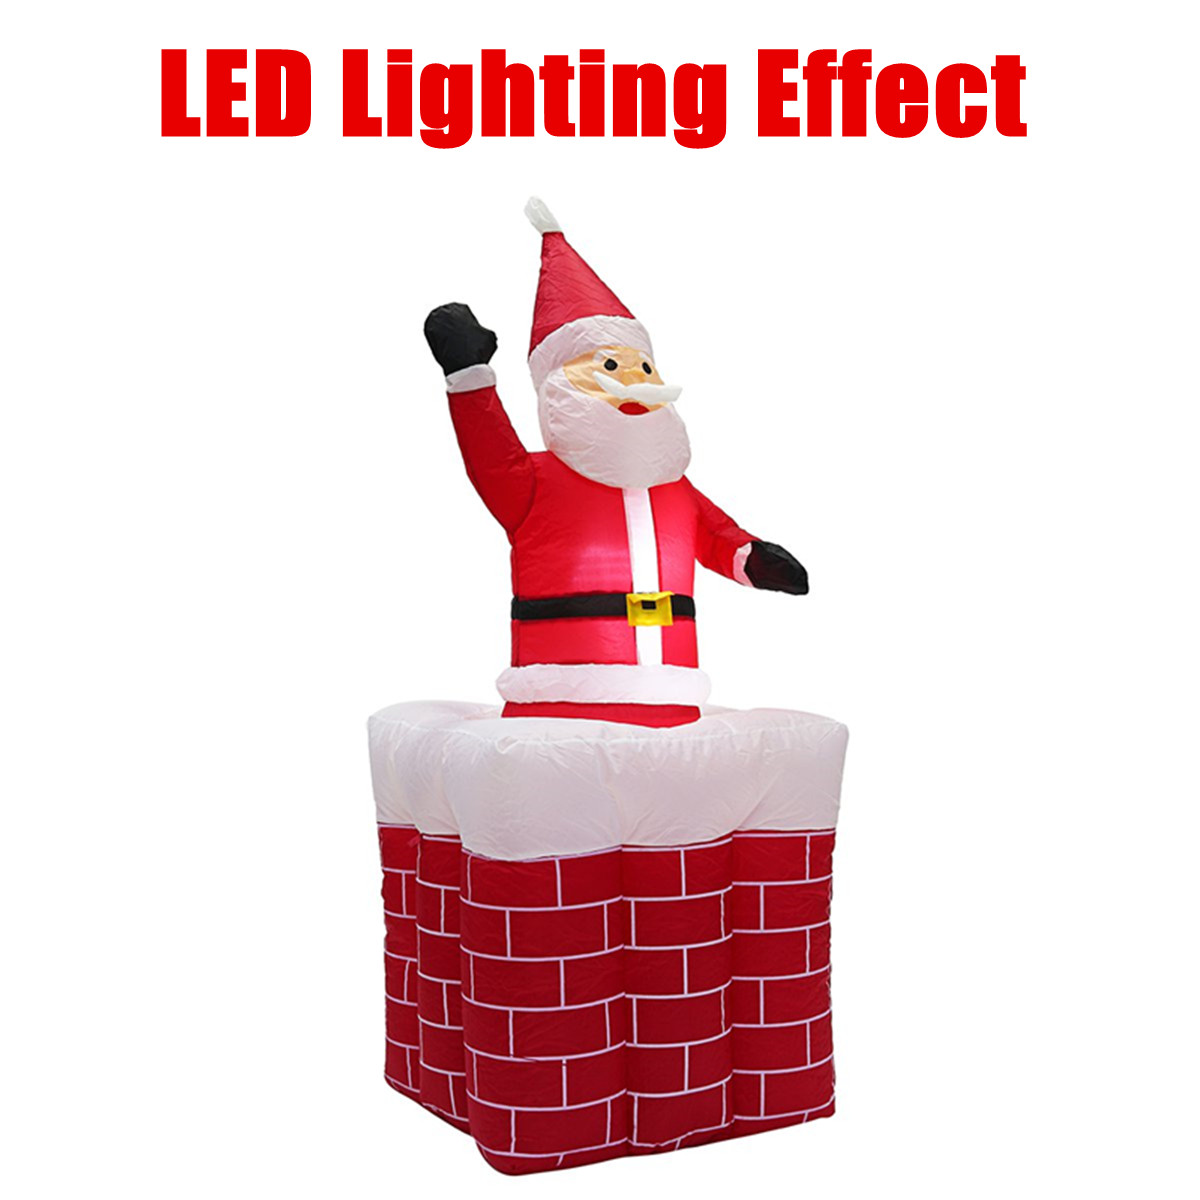 16M-Telescoping-Santa-Inflatable-Christmas-Light-Pop-Up-Chimney-Decorations-1364443